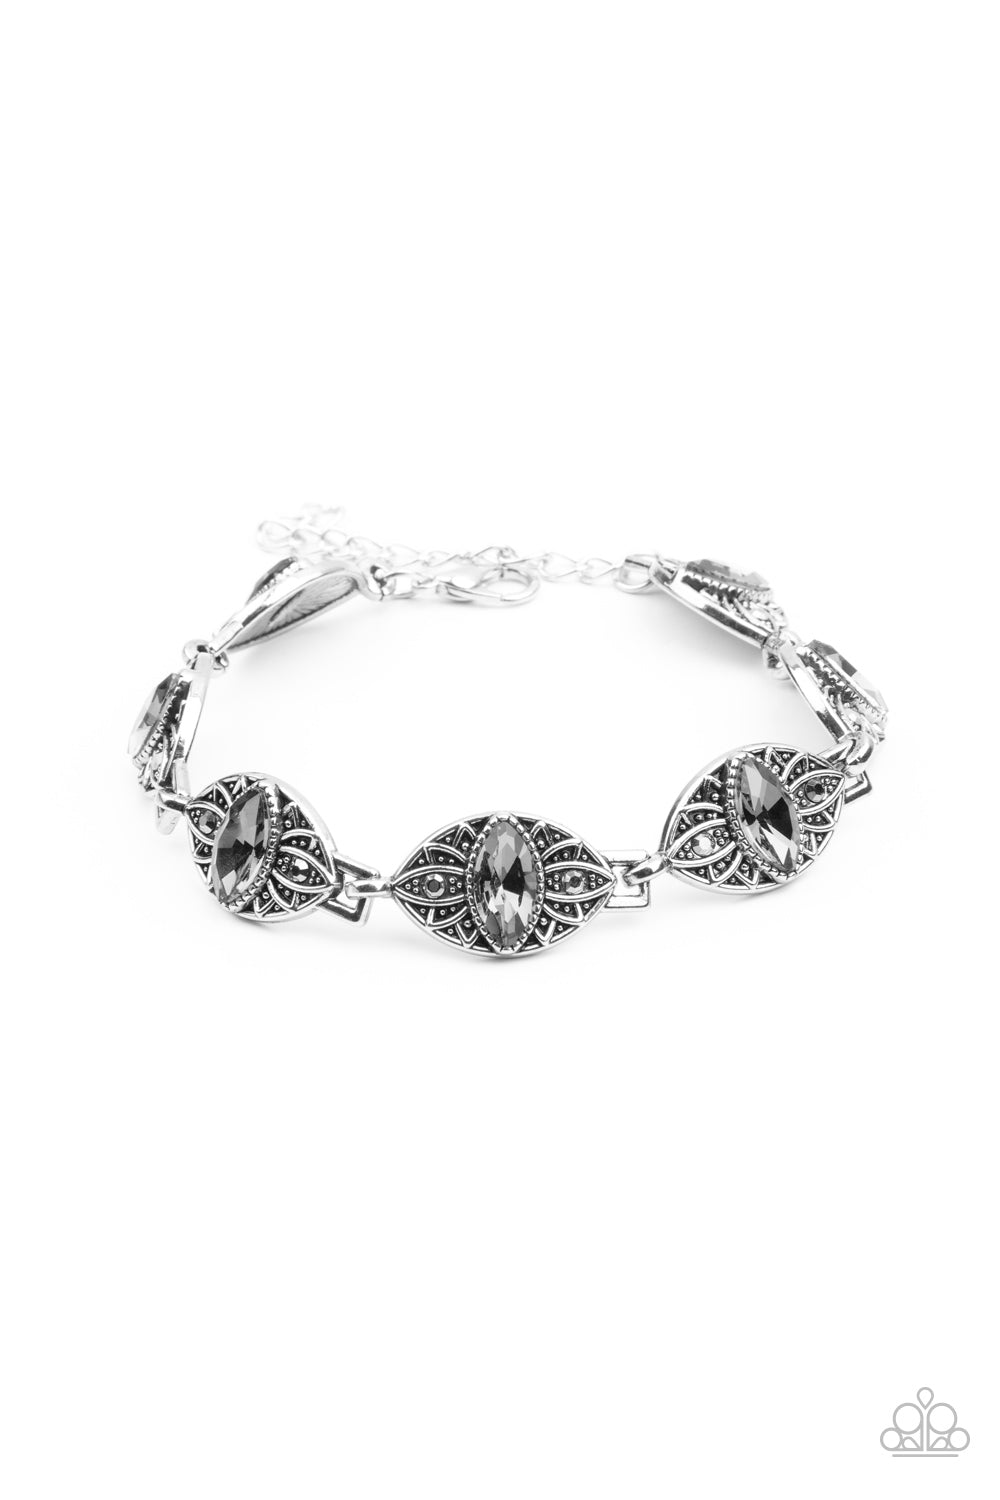 Crown Privilege - silver - Paparazzi bracelet